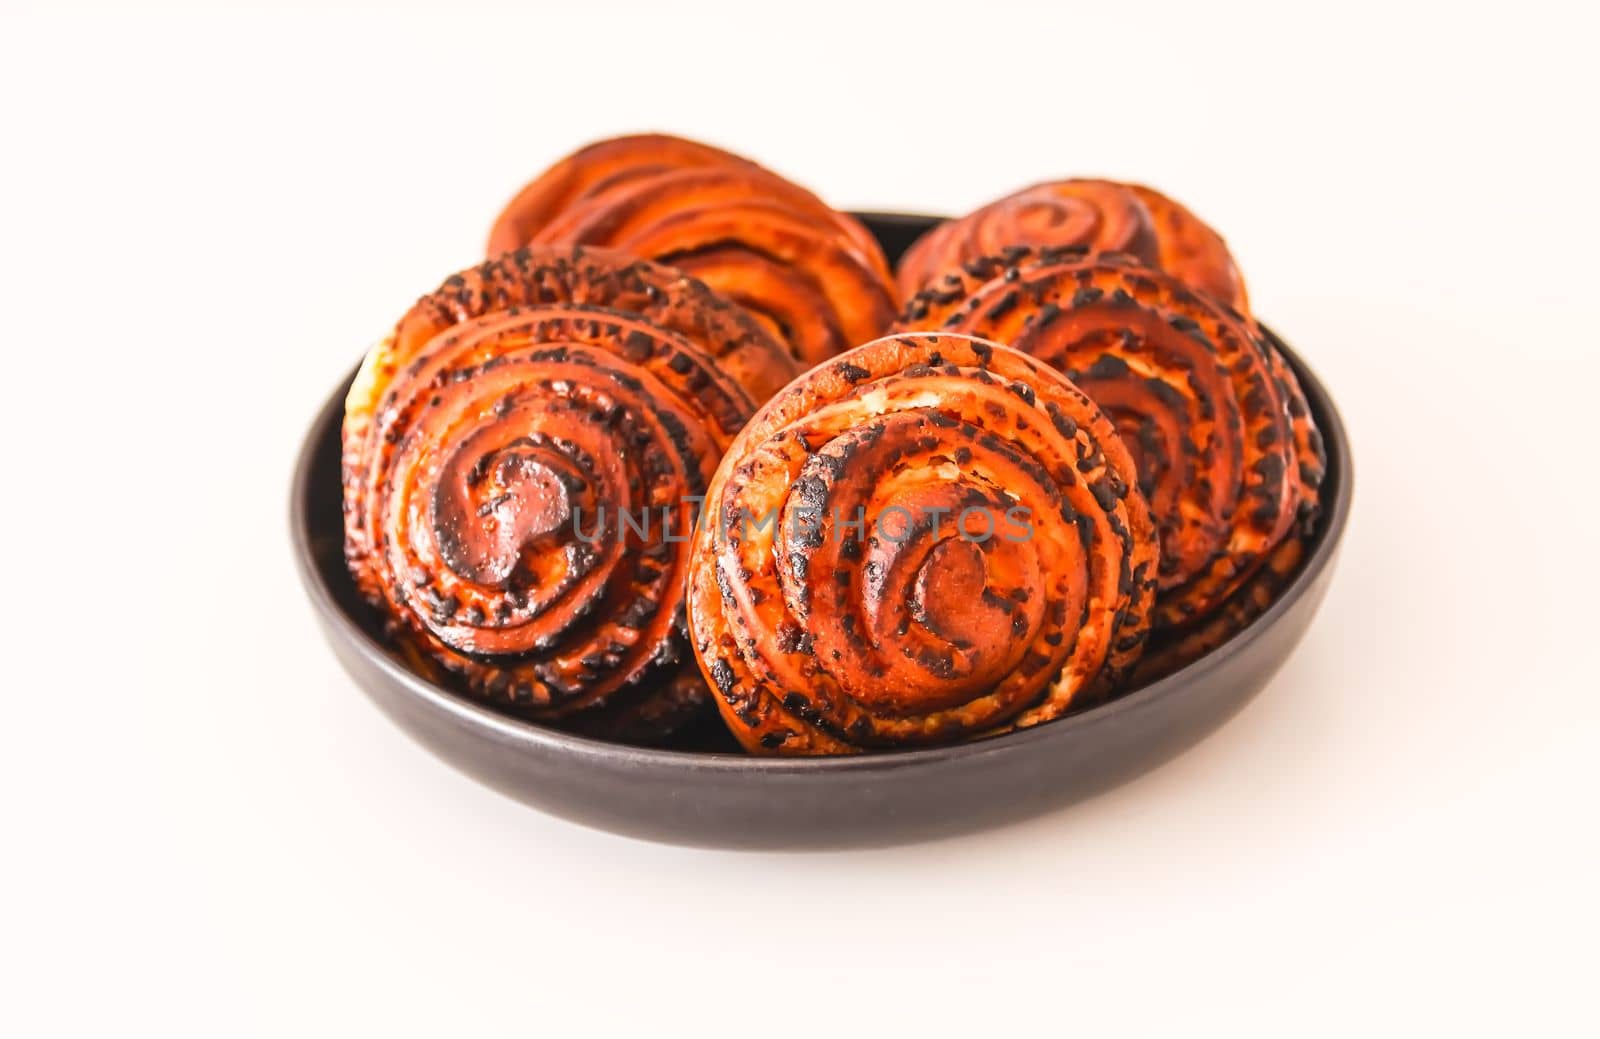 Sweet homemade cinnamon buns on a black ceramic plate.